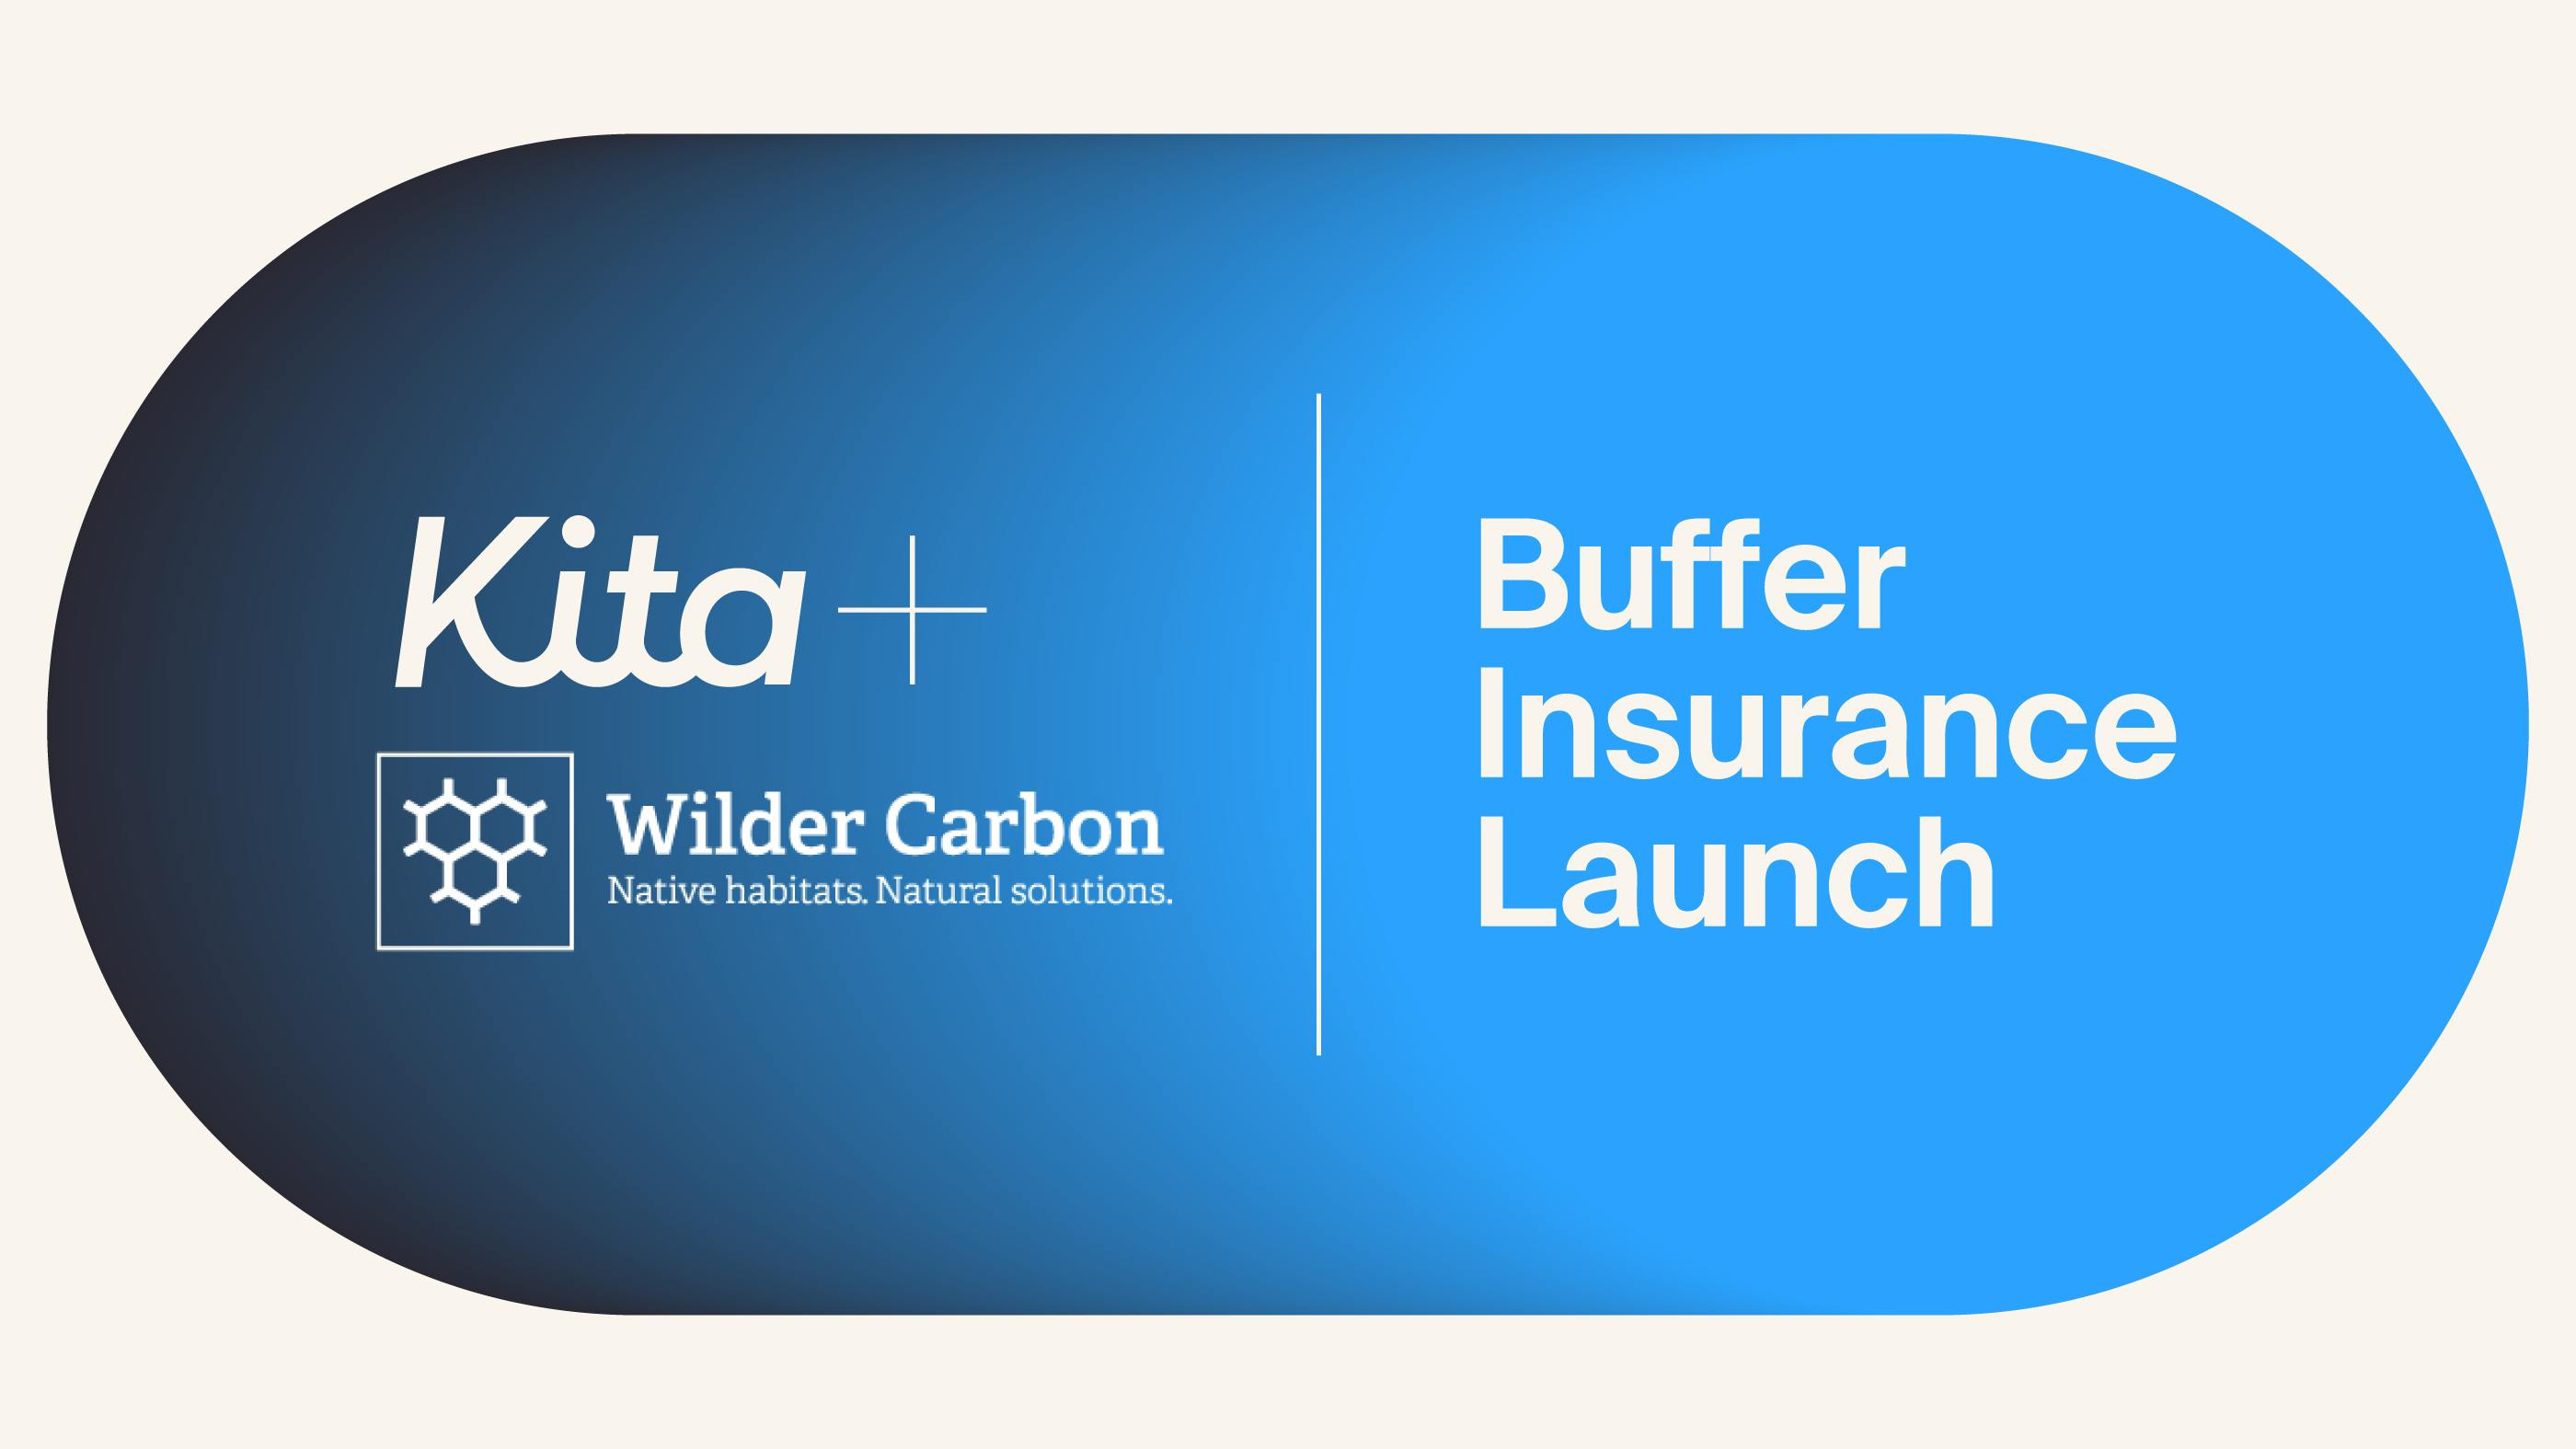 kita buffer insurance launch promo image